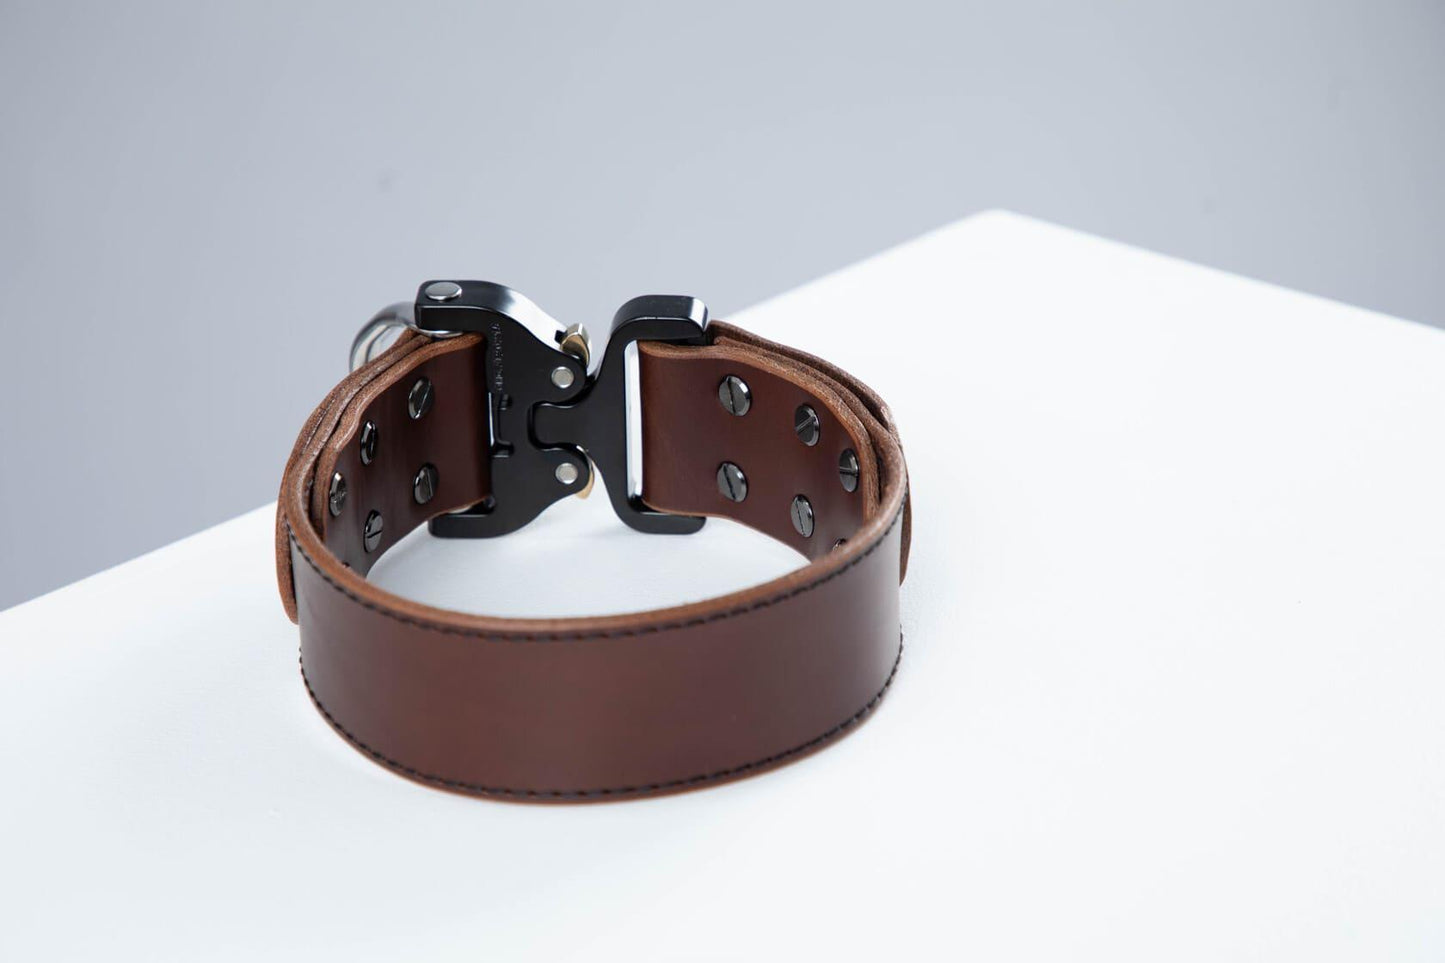 Brown leather dog collar with COBRA® buckle - premium dog goods handmade in Europe by animalistus